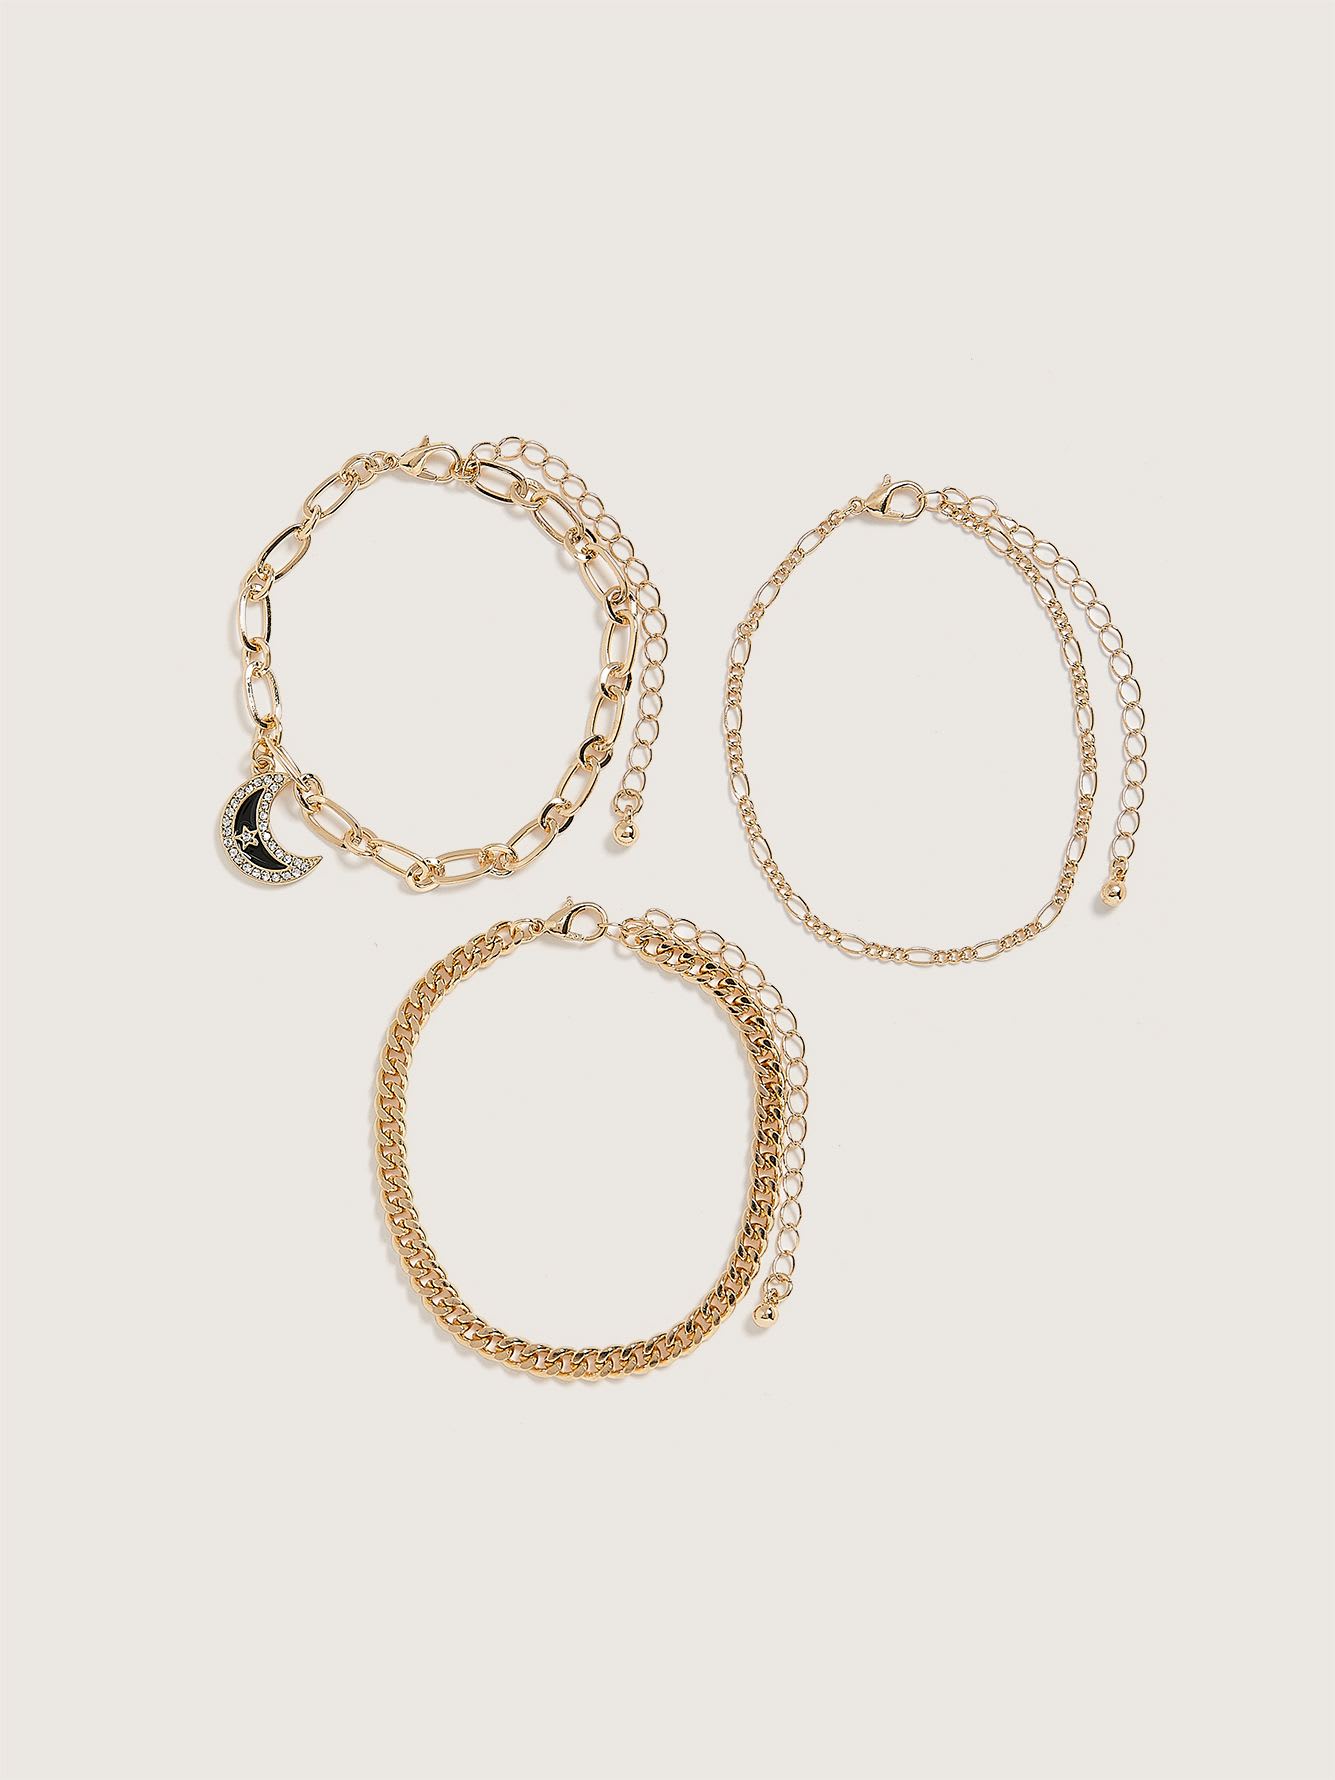 Celestial Charm Chain Bracelets, Set of 3 | Penningtons